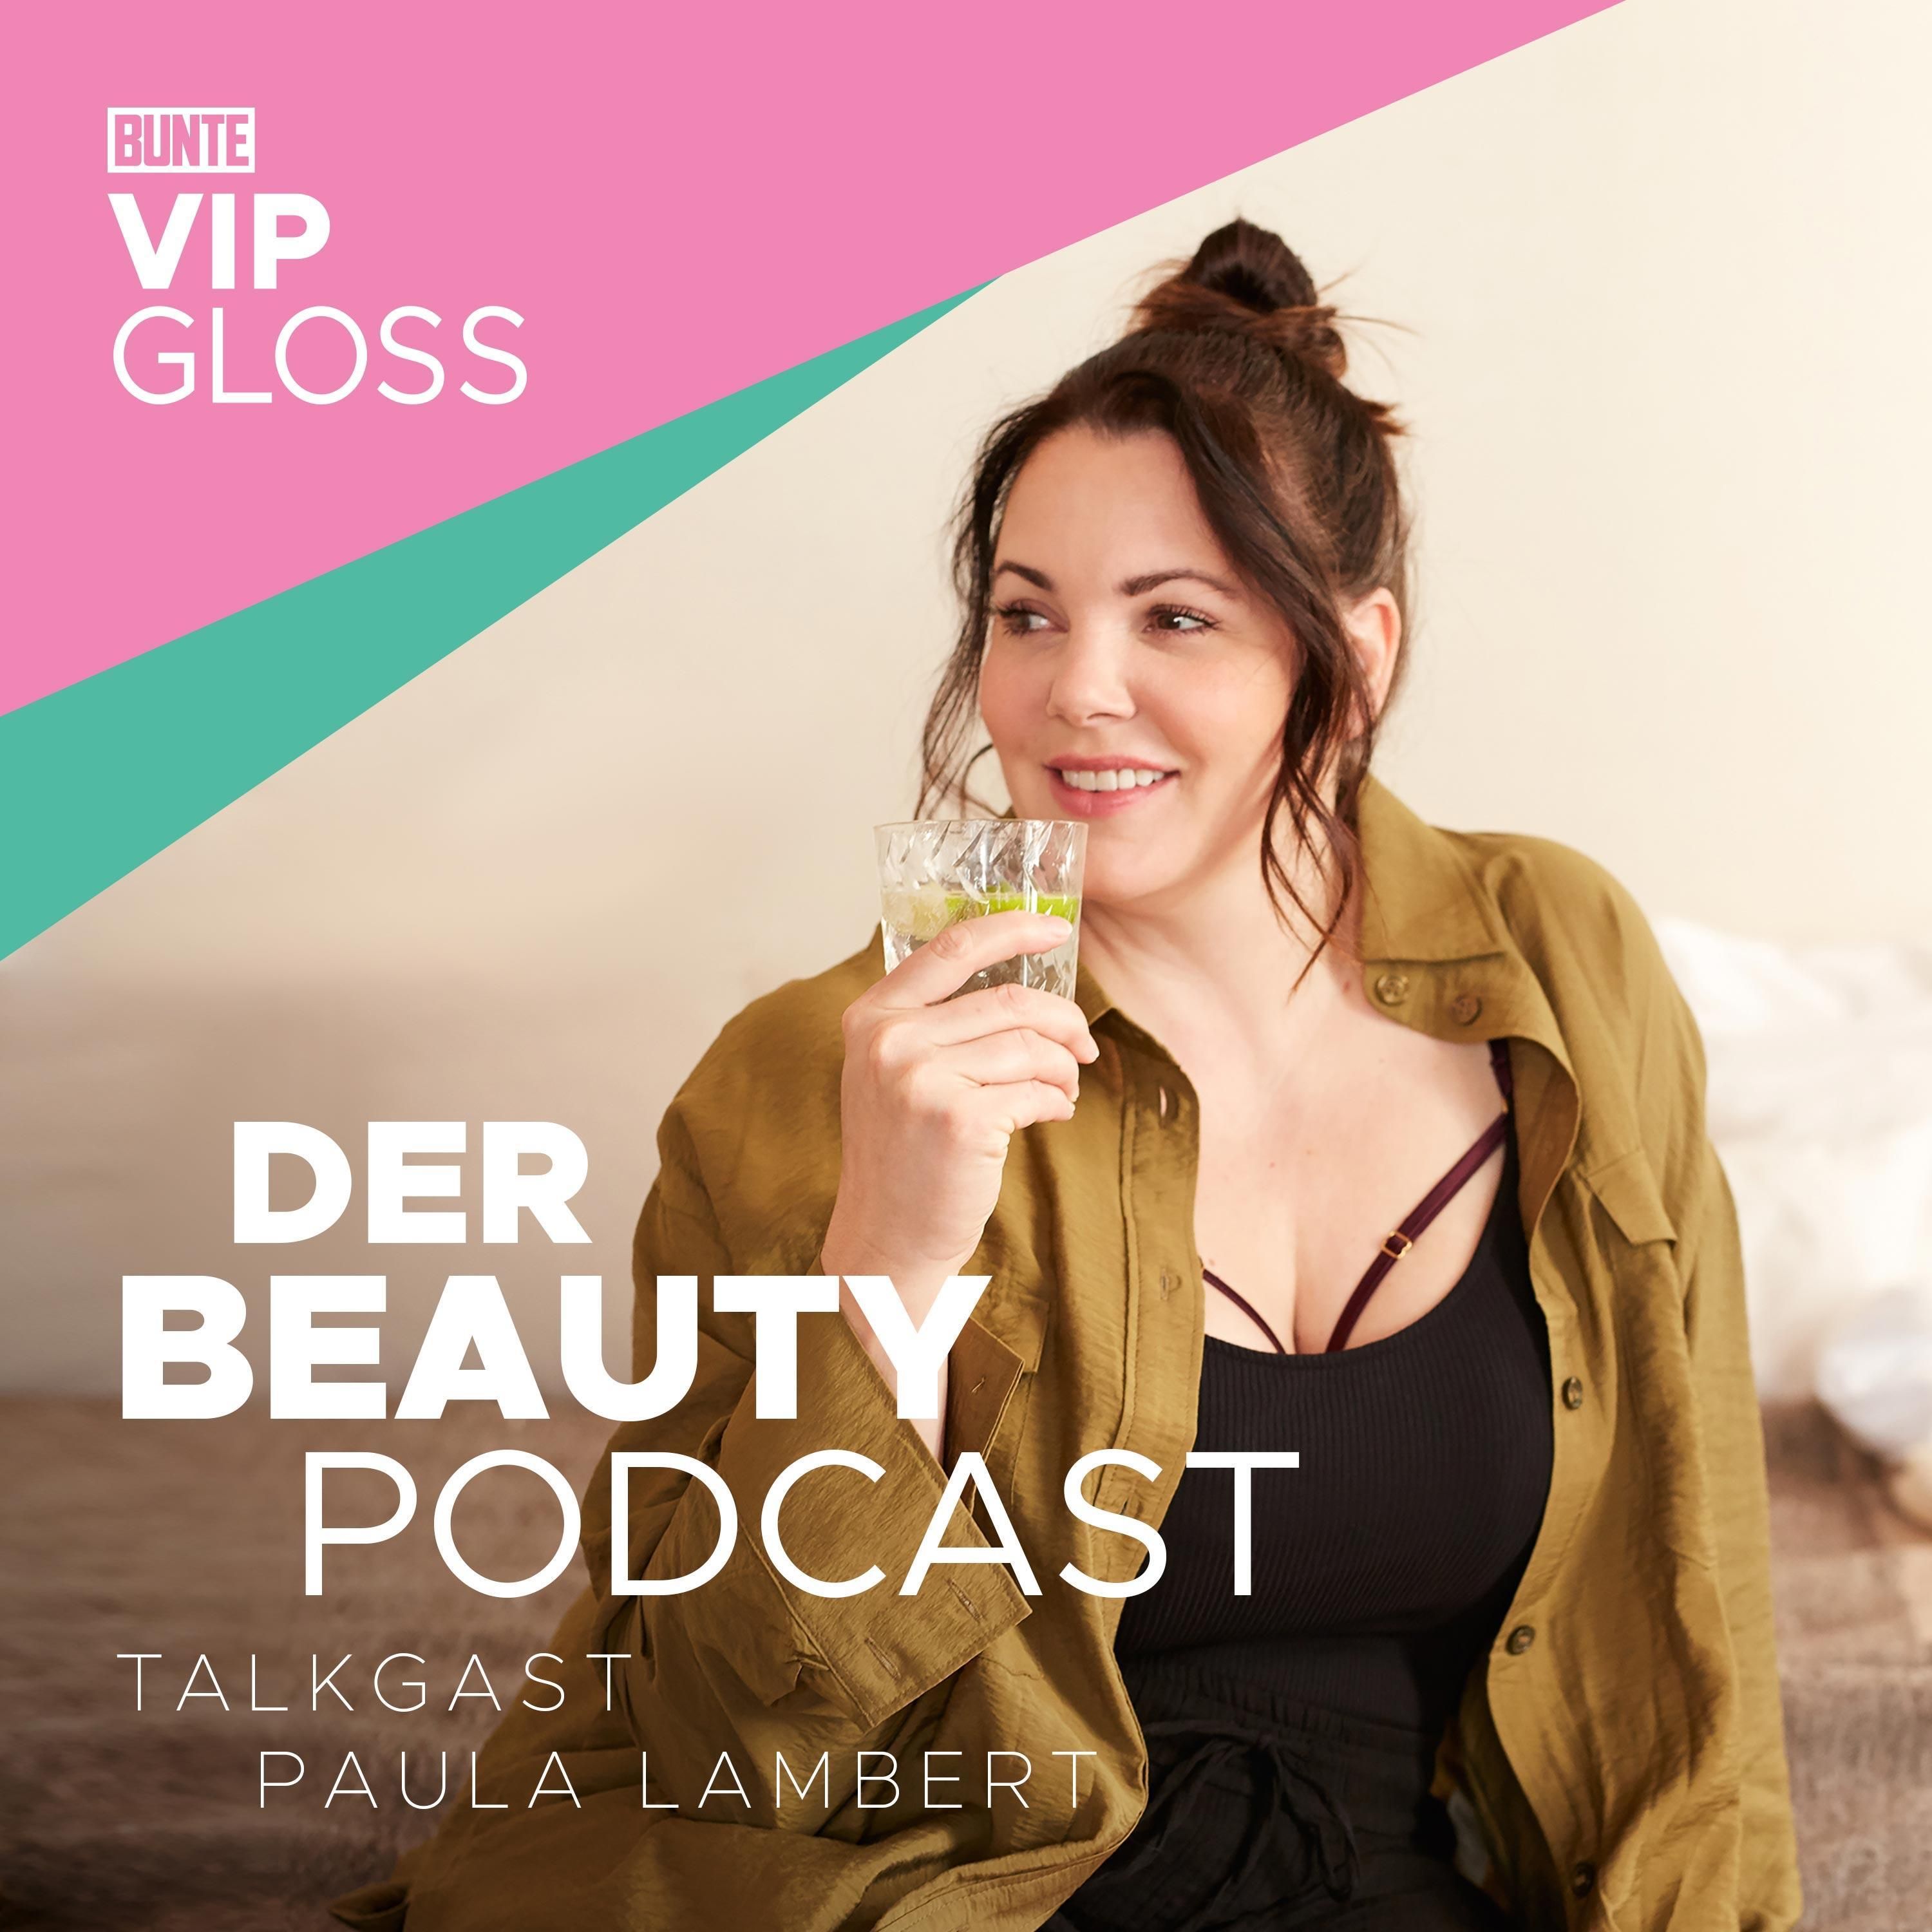 BUNTE VIP GLOSS Der Beauty Podcast RTL 